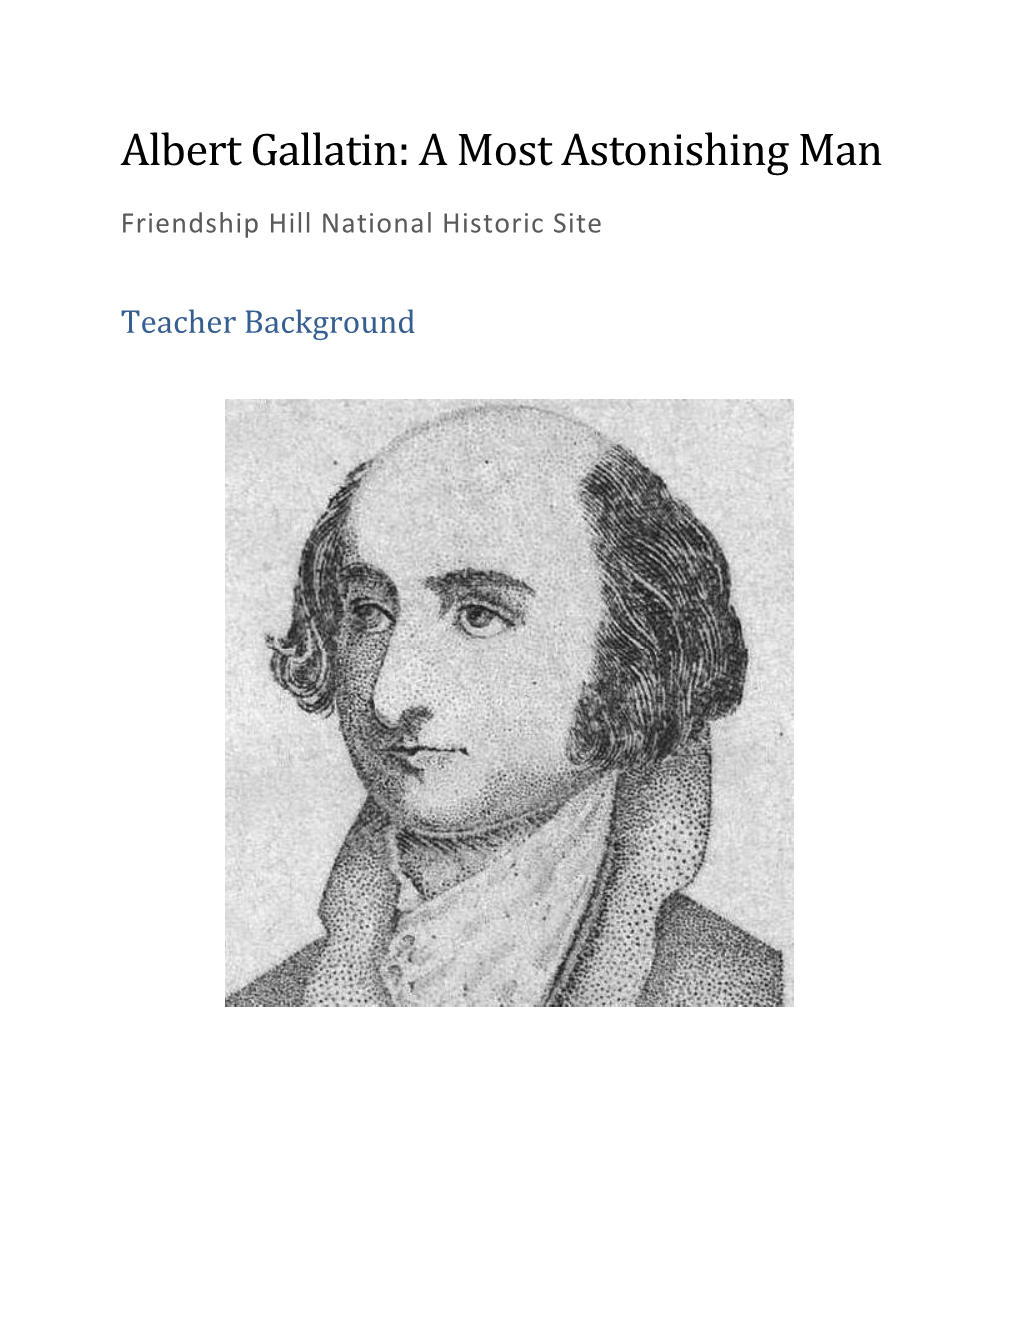 Teacher Background- Albert Gallatin